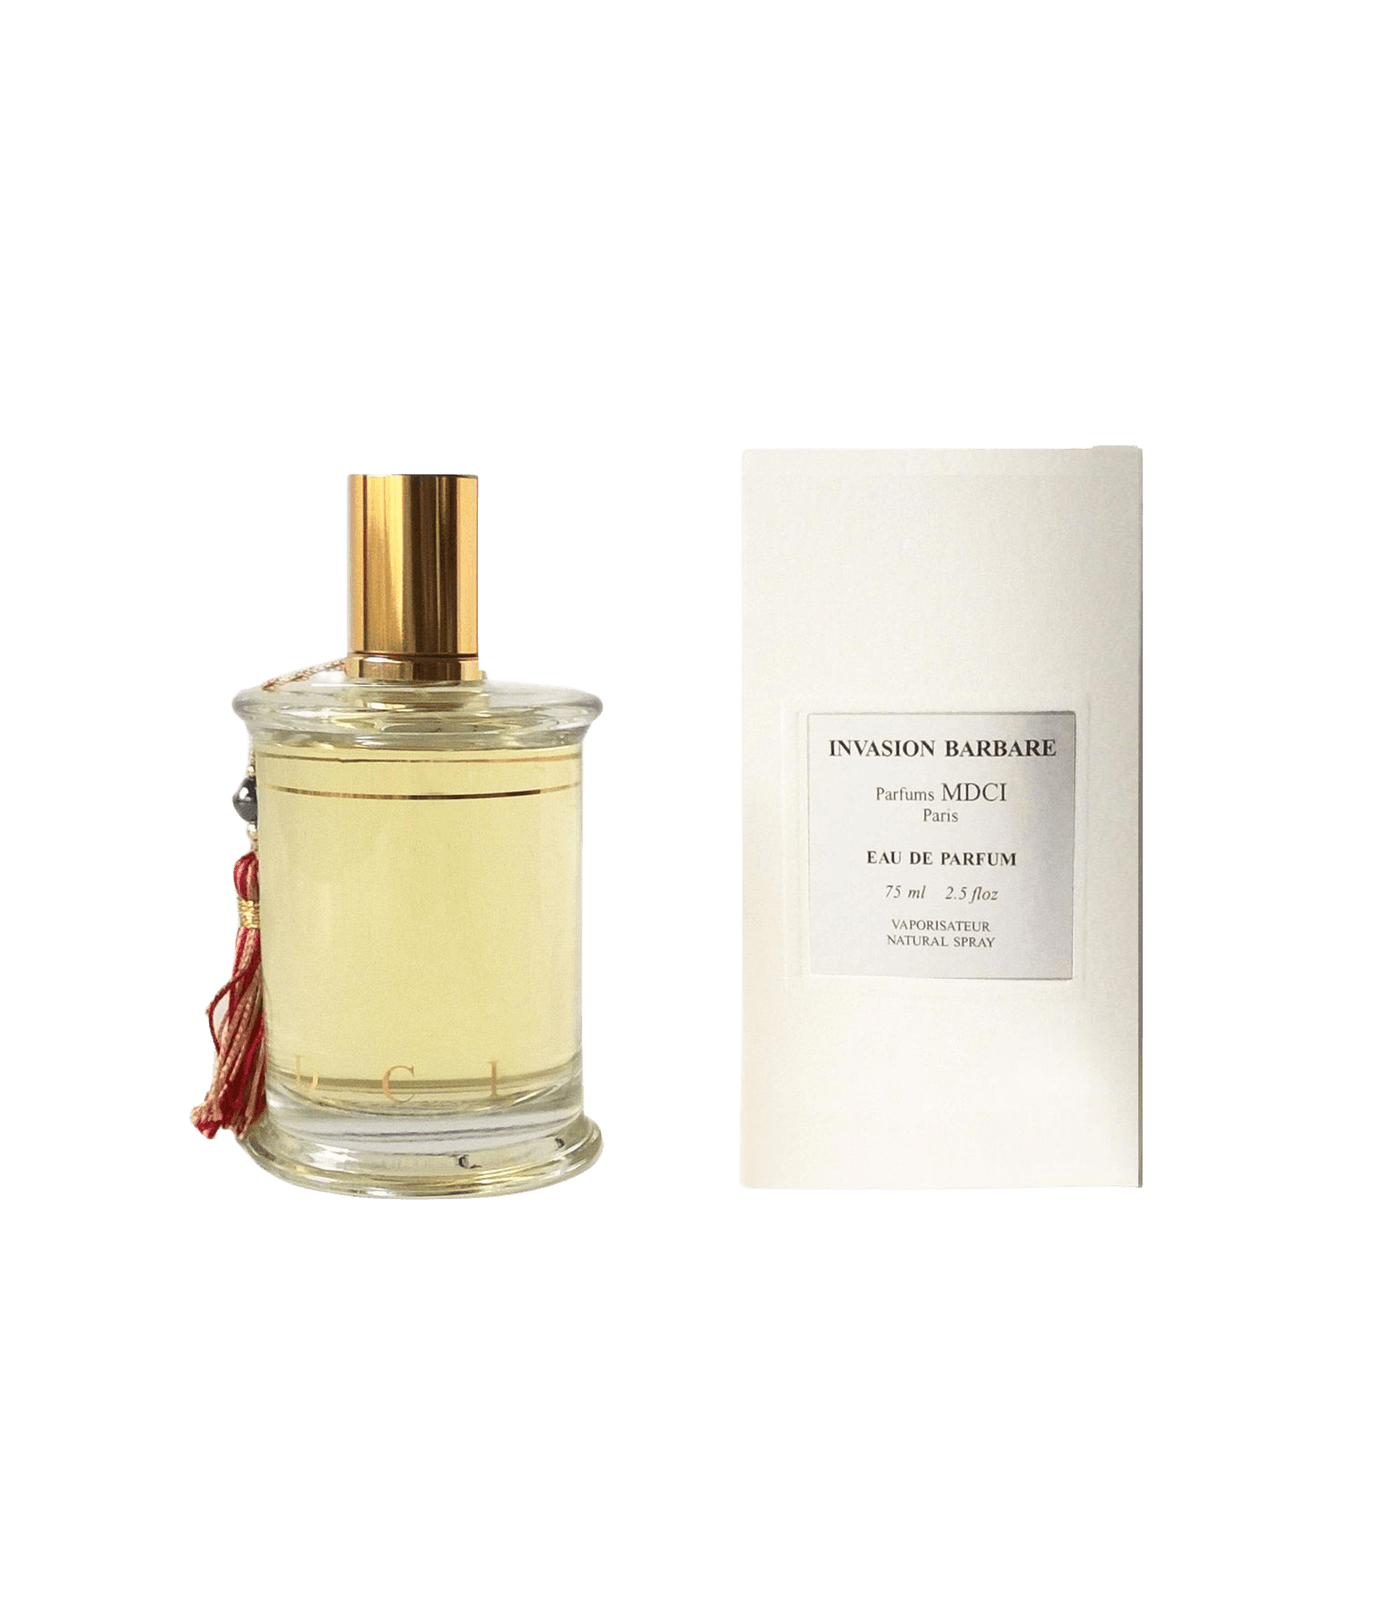 Parfum MDCI Invasion Barbare perfume + package | Perfume Lounge